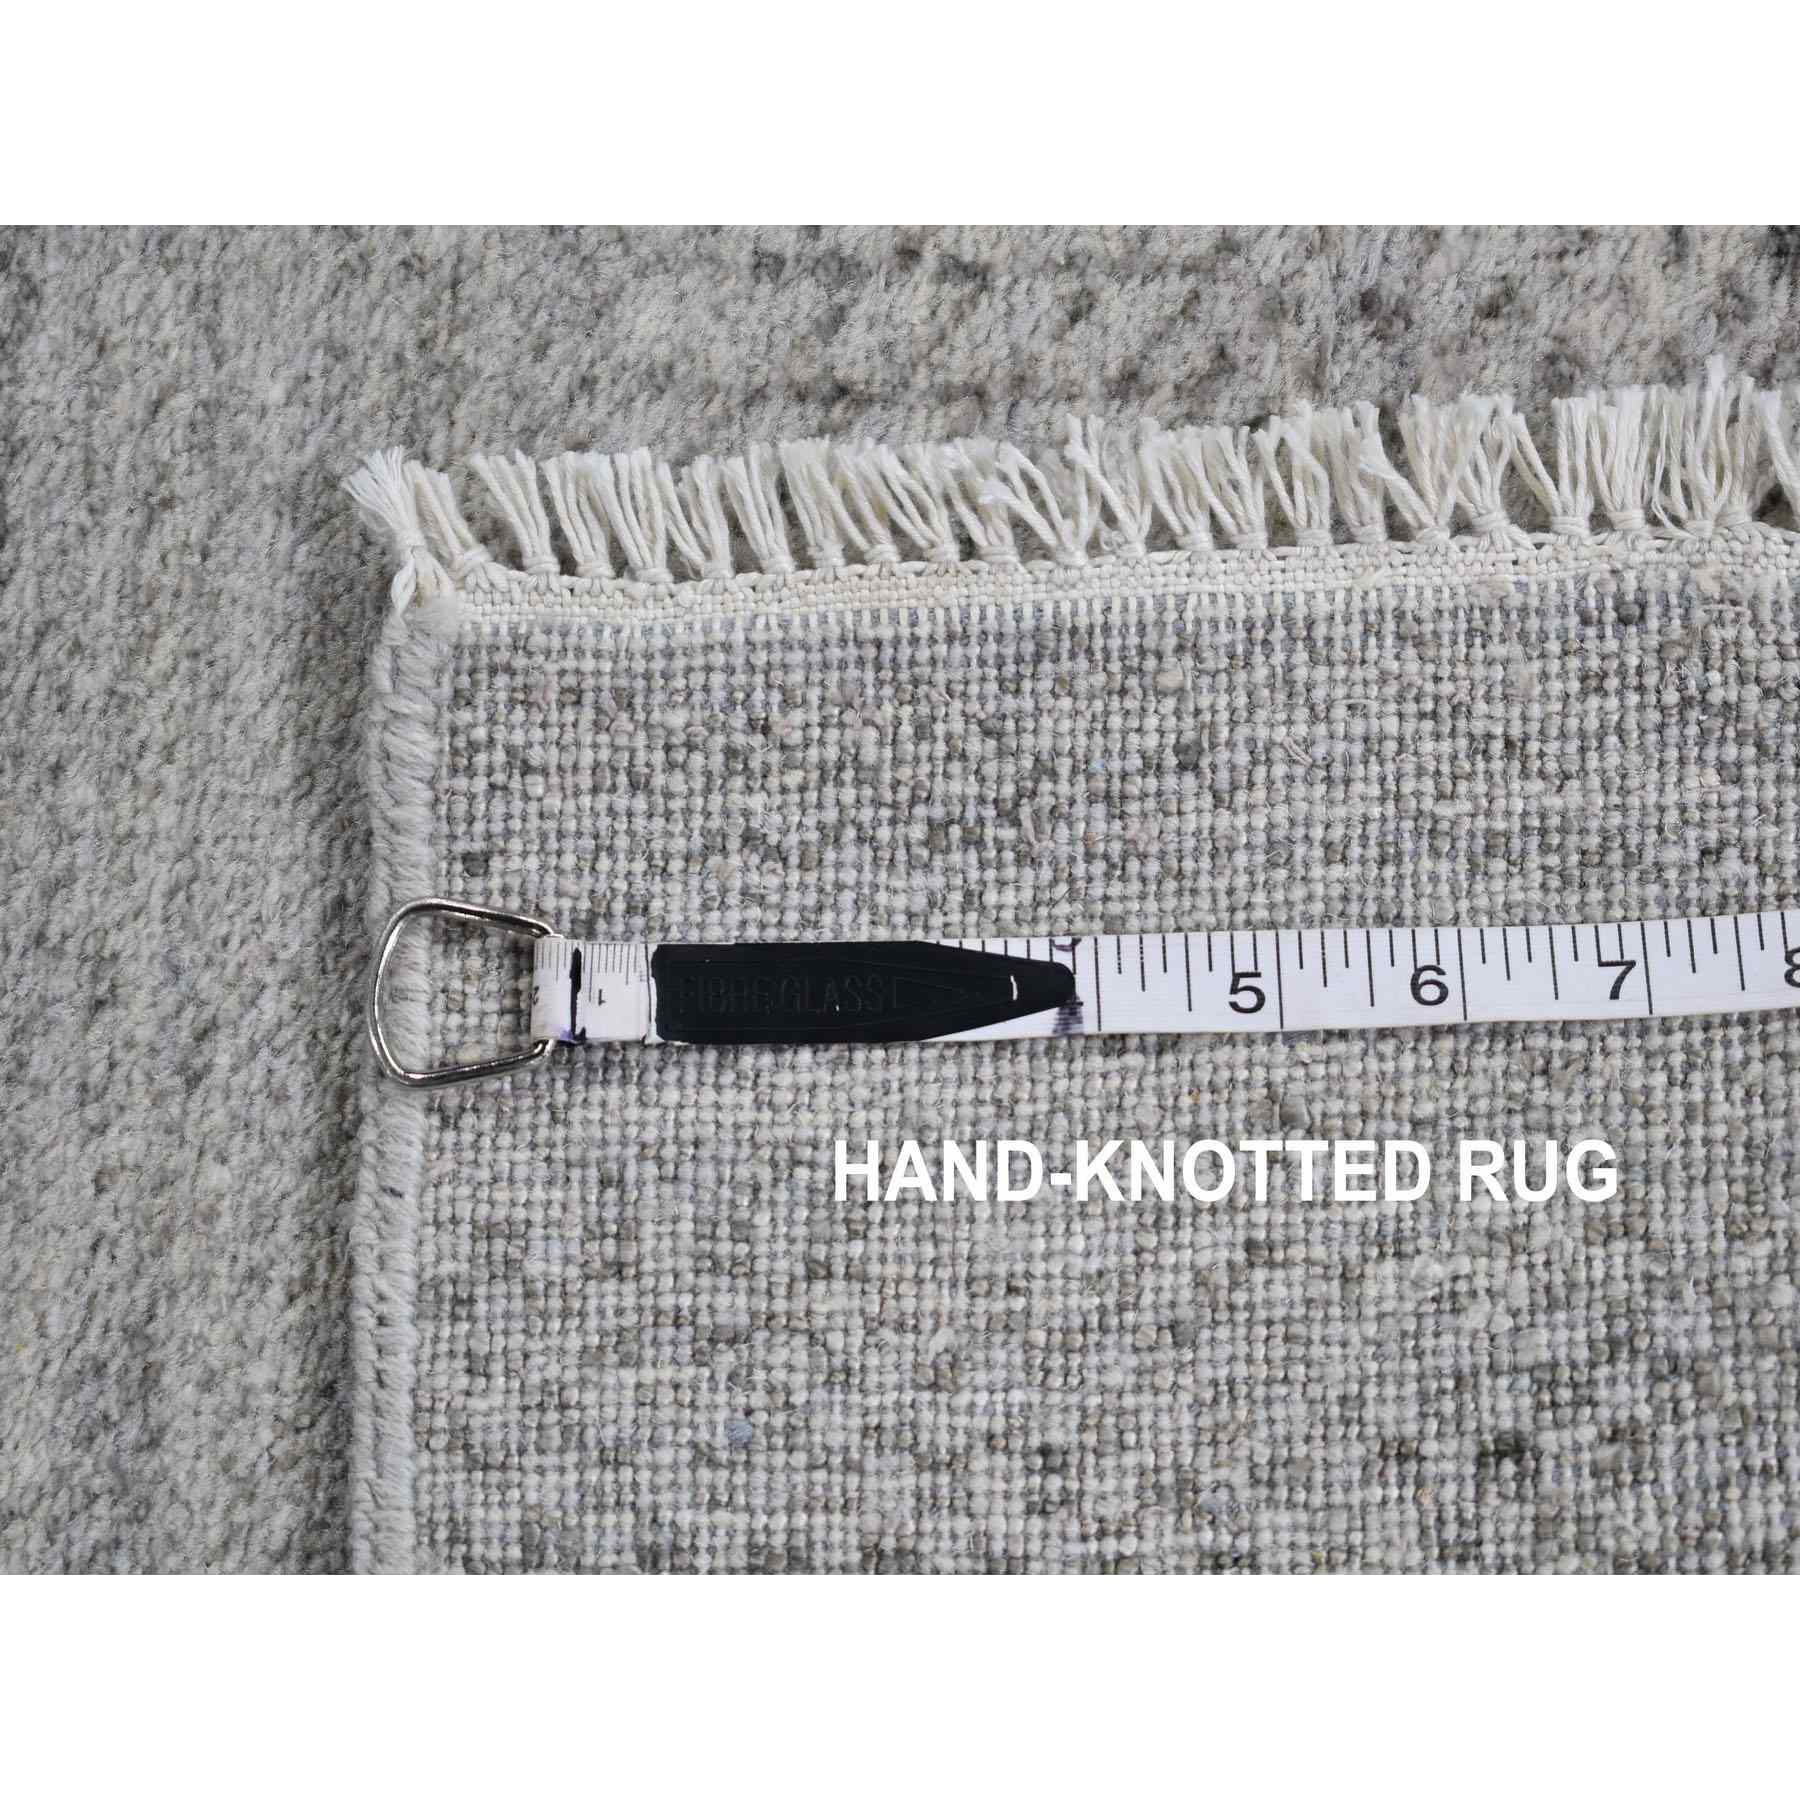 2-6 x9-10  Gray Grass Design Wool And Silk Hand Knotted Runner Oriental Rug 